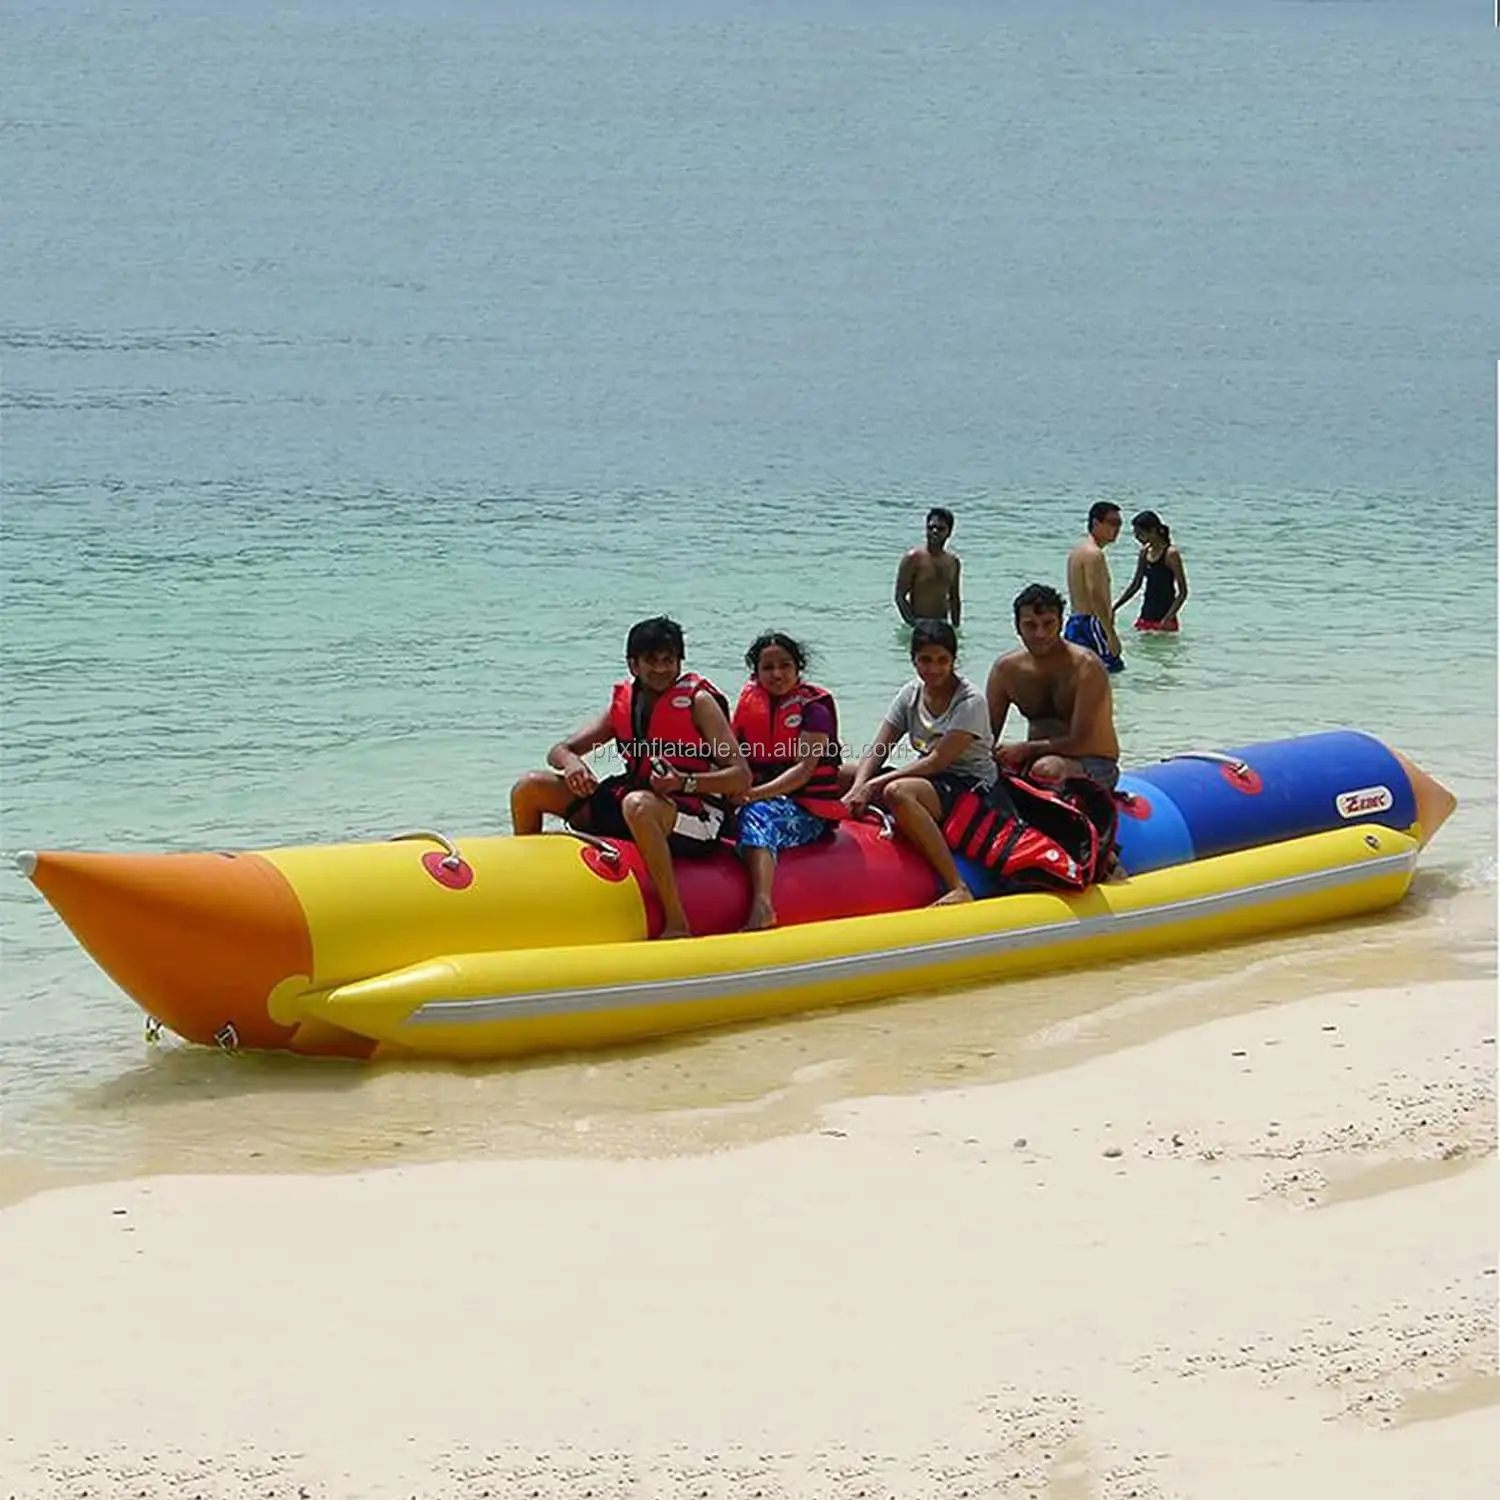 Tabung tiup perahu pisang rakit dapat ditarik tabung Trailer permainan air mengambang untuk dewasa peralatan olahraga air lainnya